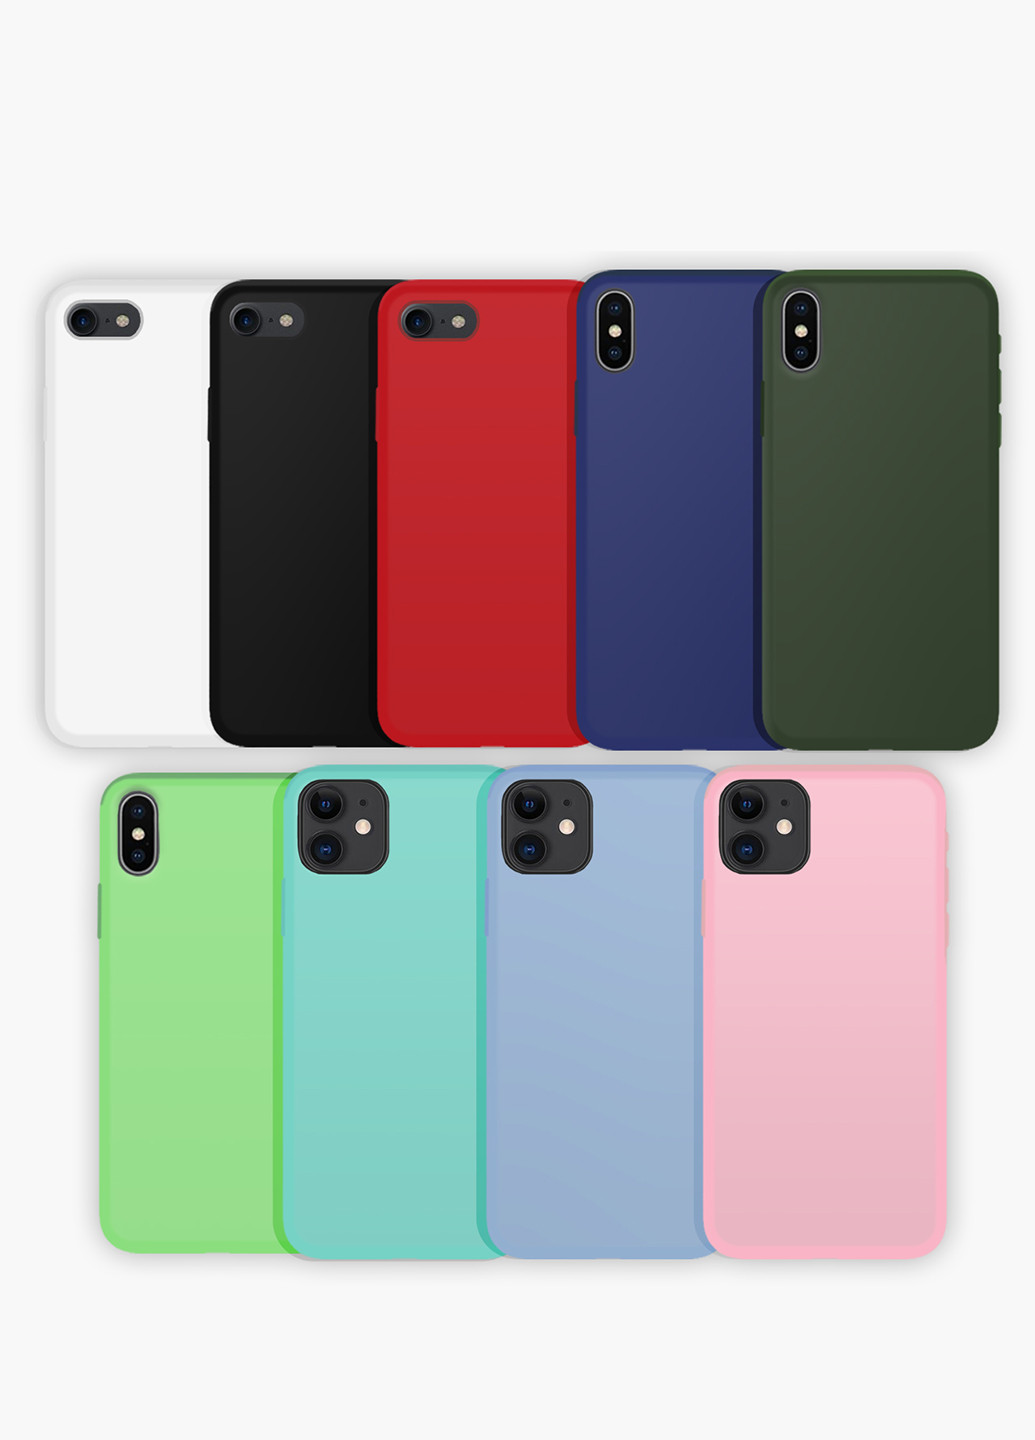 Чехол силиконовый Apple Iphone 8 Лайк (Likee) (6151-1711) MobiPrint (219777482)